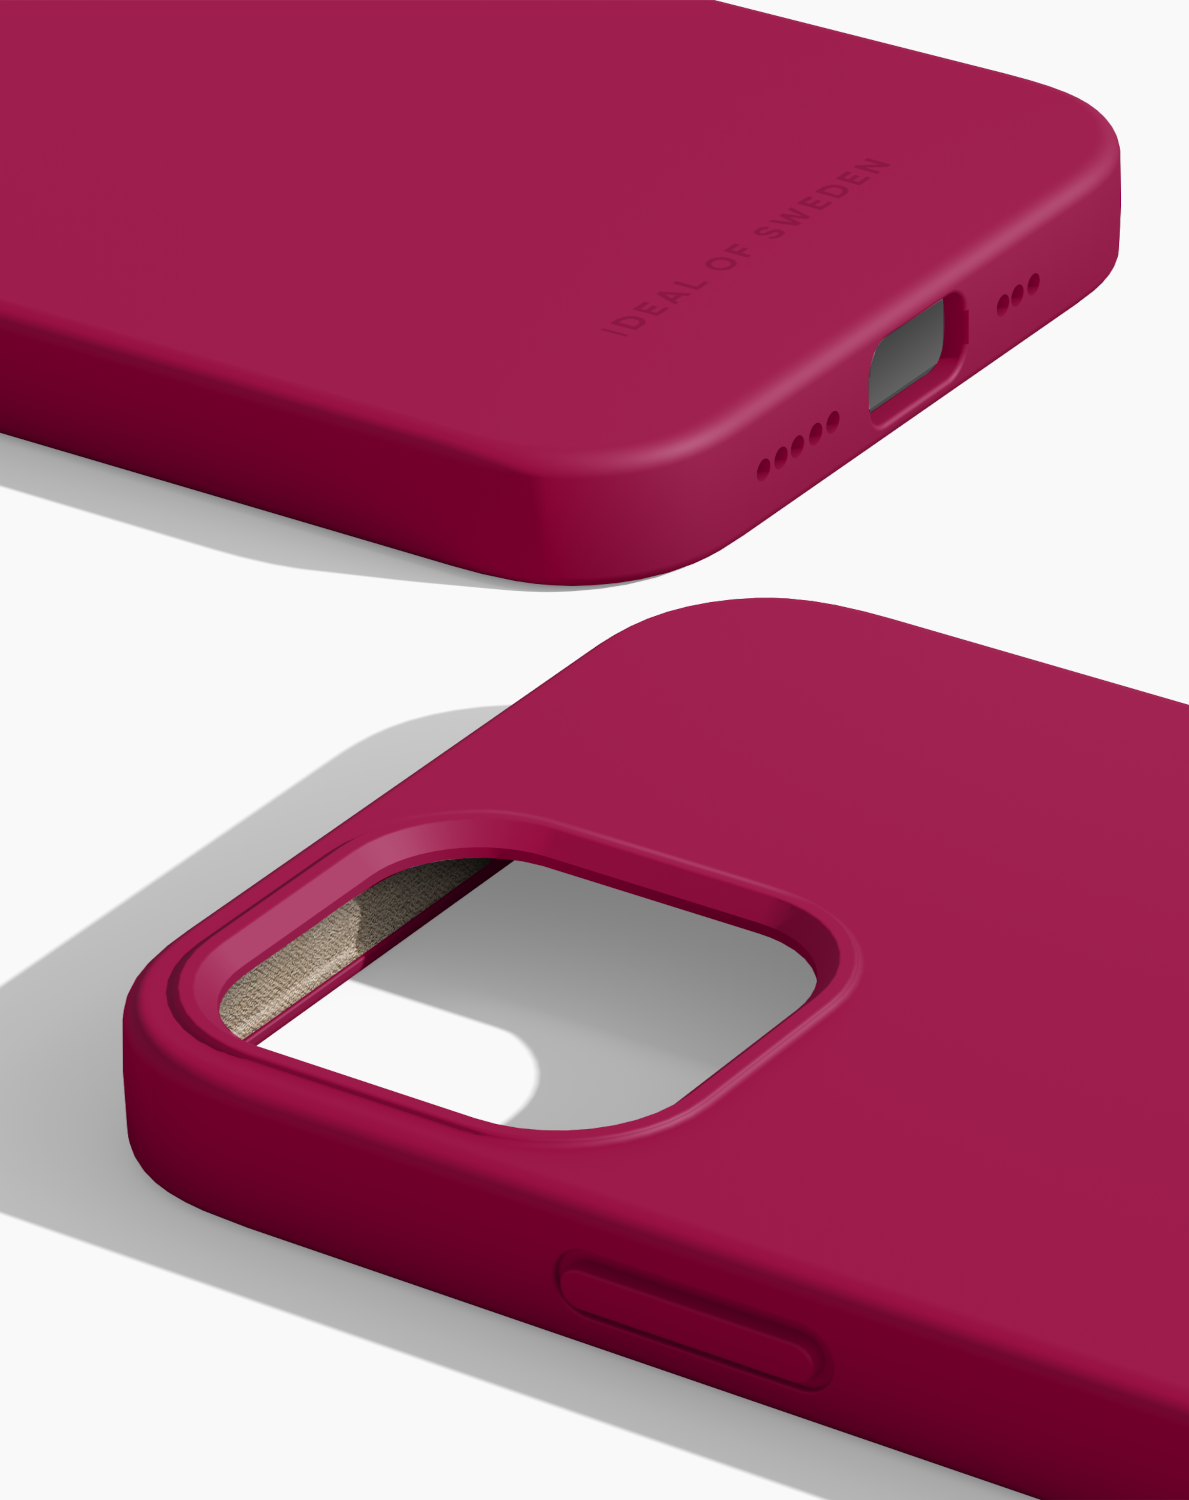 3 iPhone 12 12 Pro Silicone Case iDeal Magenta